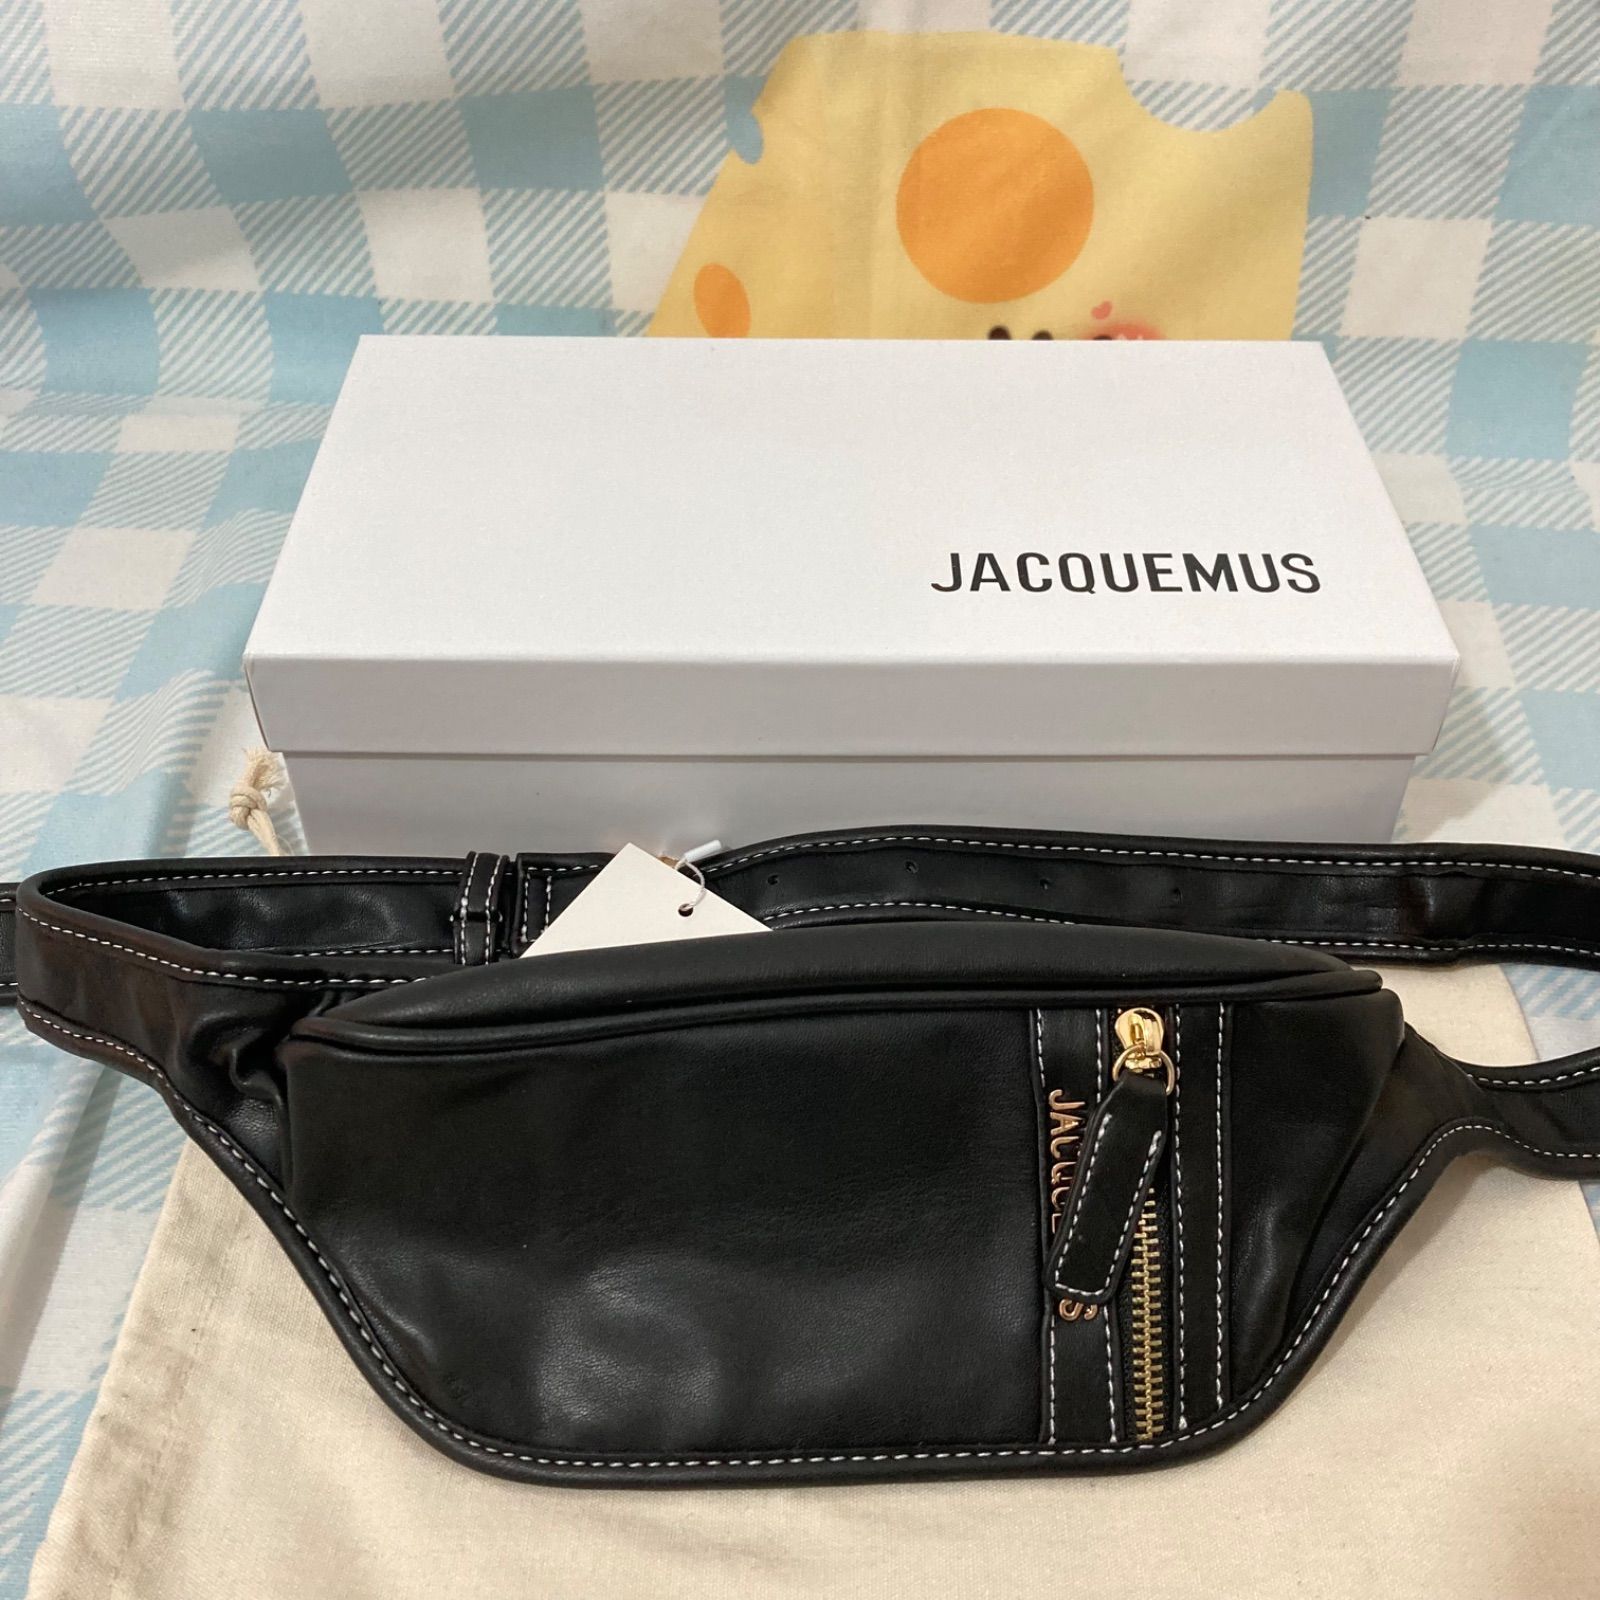 【販売売】新品未使用 Jacquemus ショルダーバッグ ショルダーバッグ